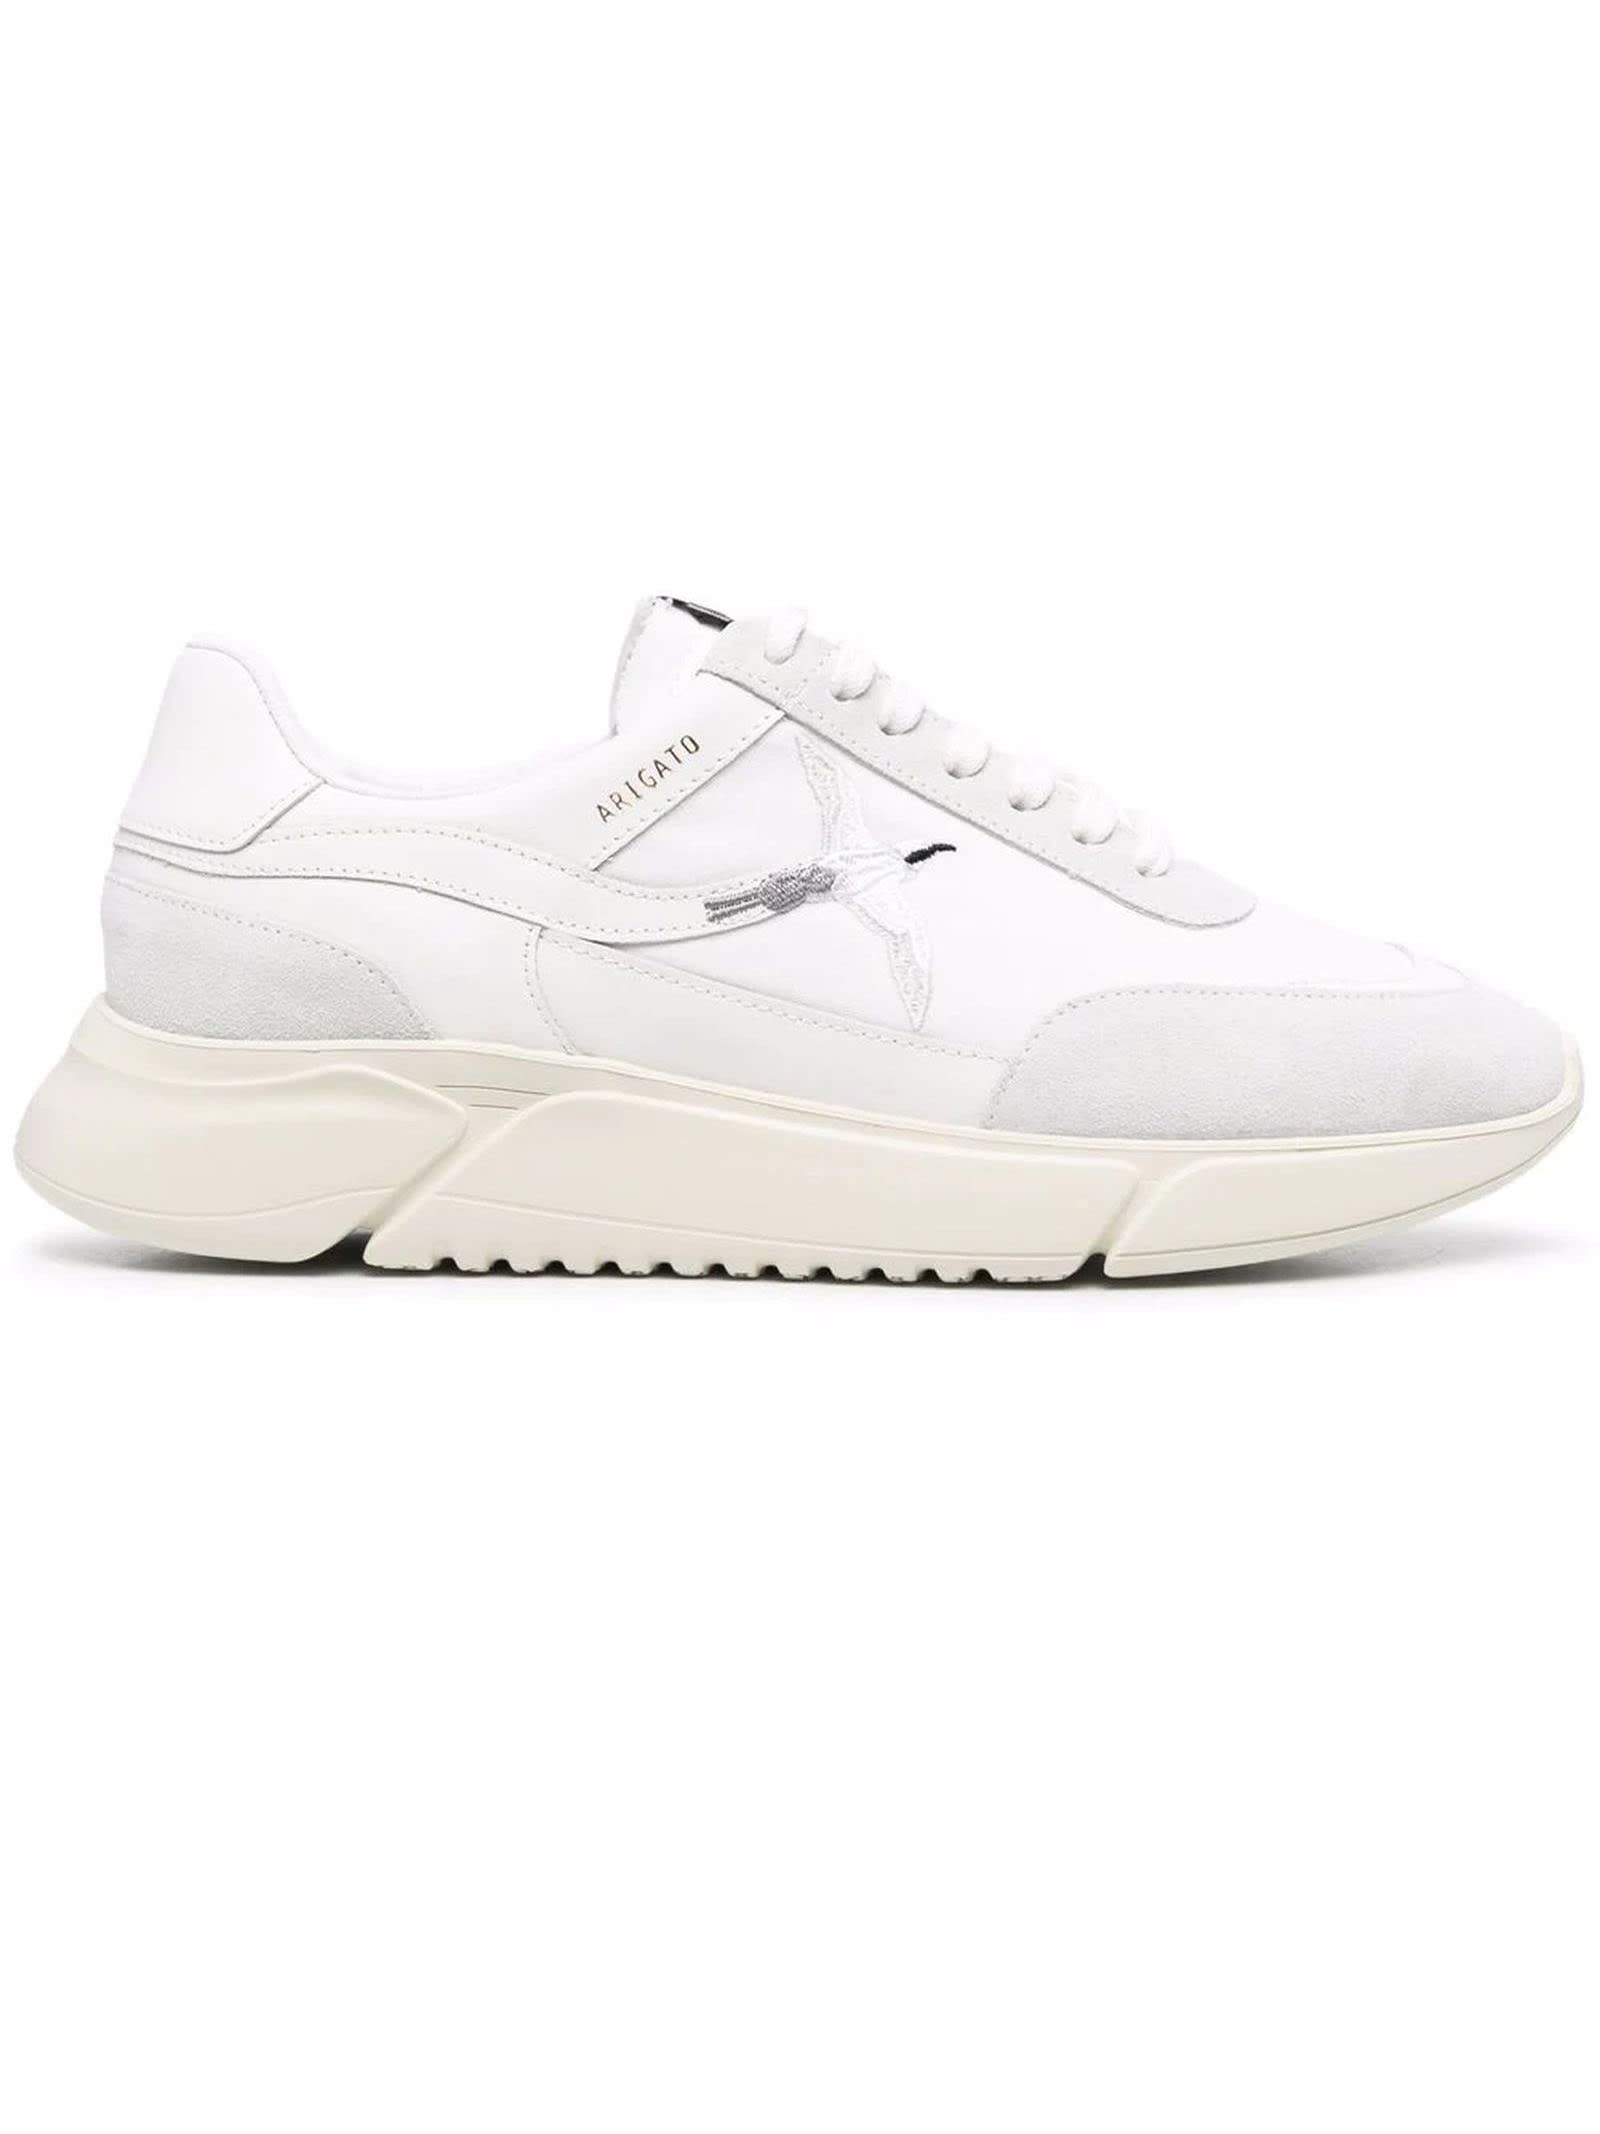 Axel Arigato White Leather Genesis Sneakers